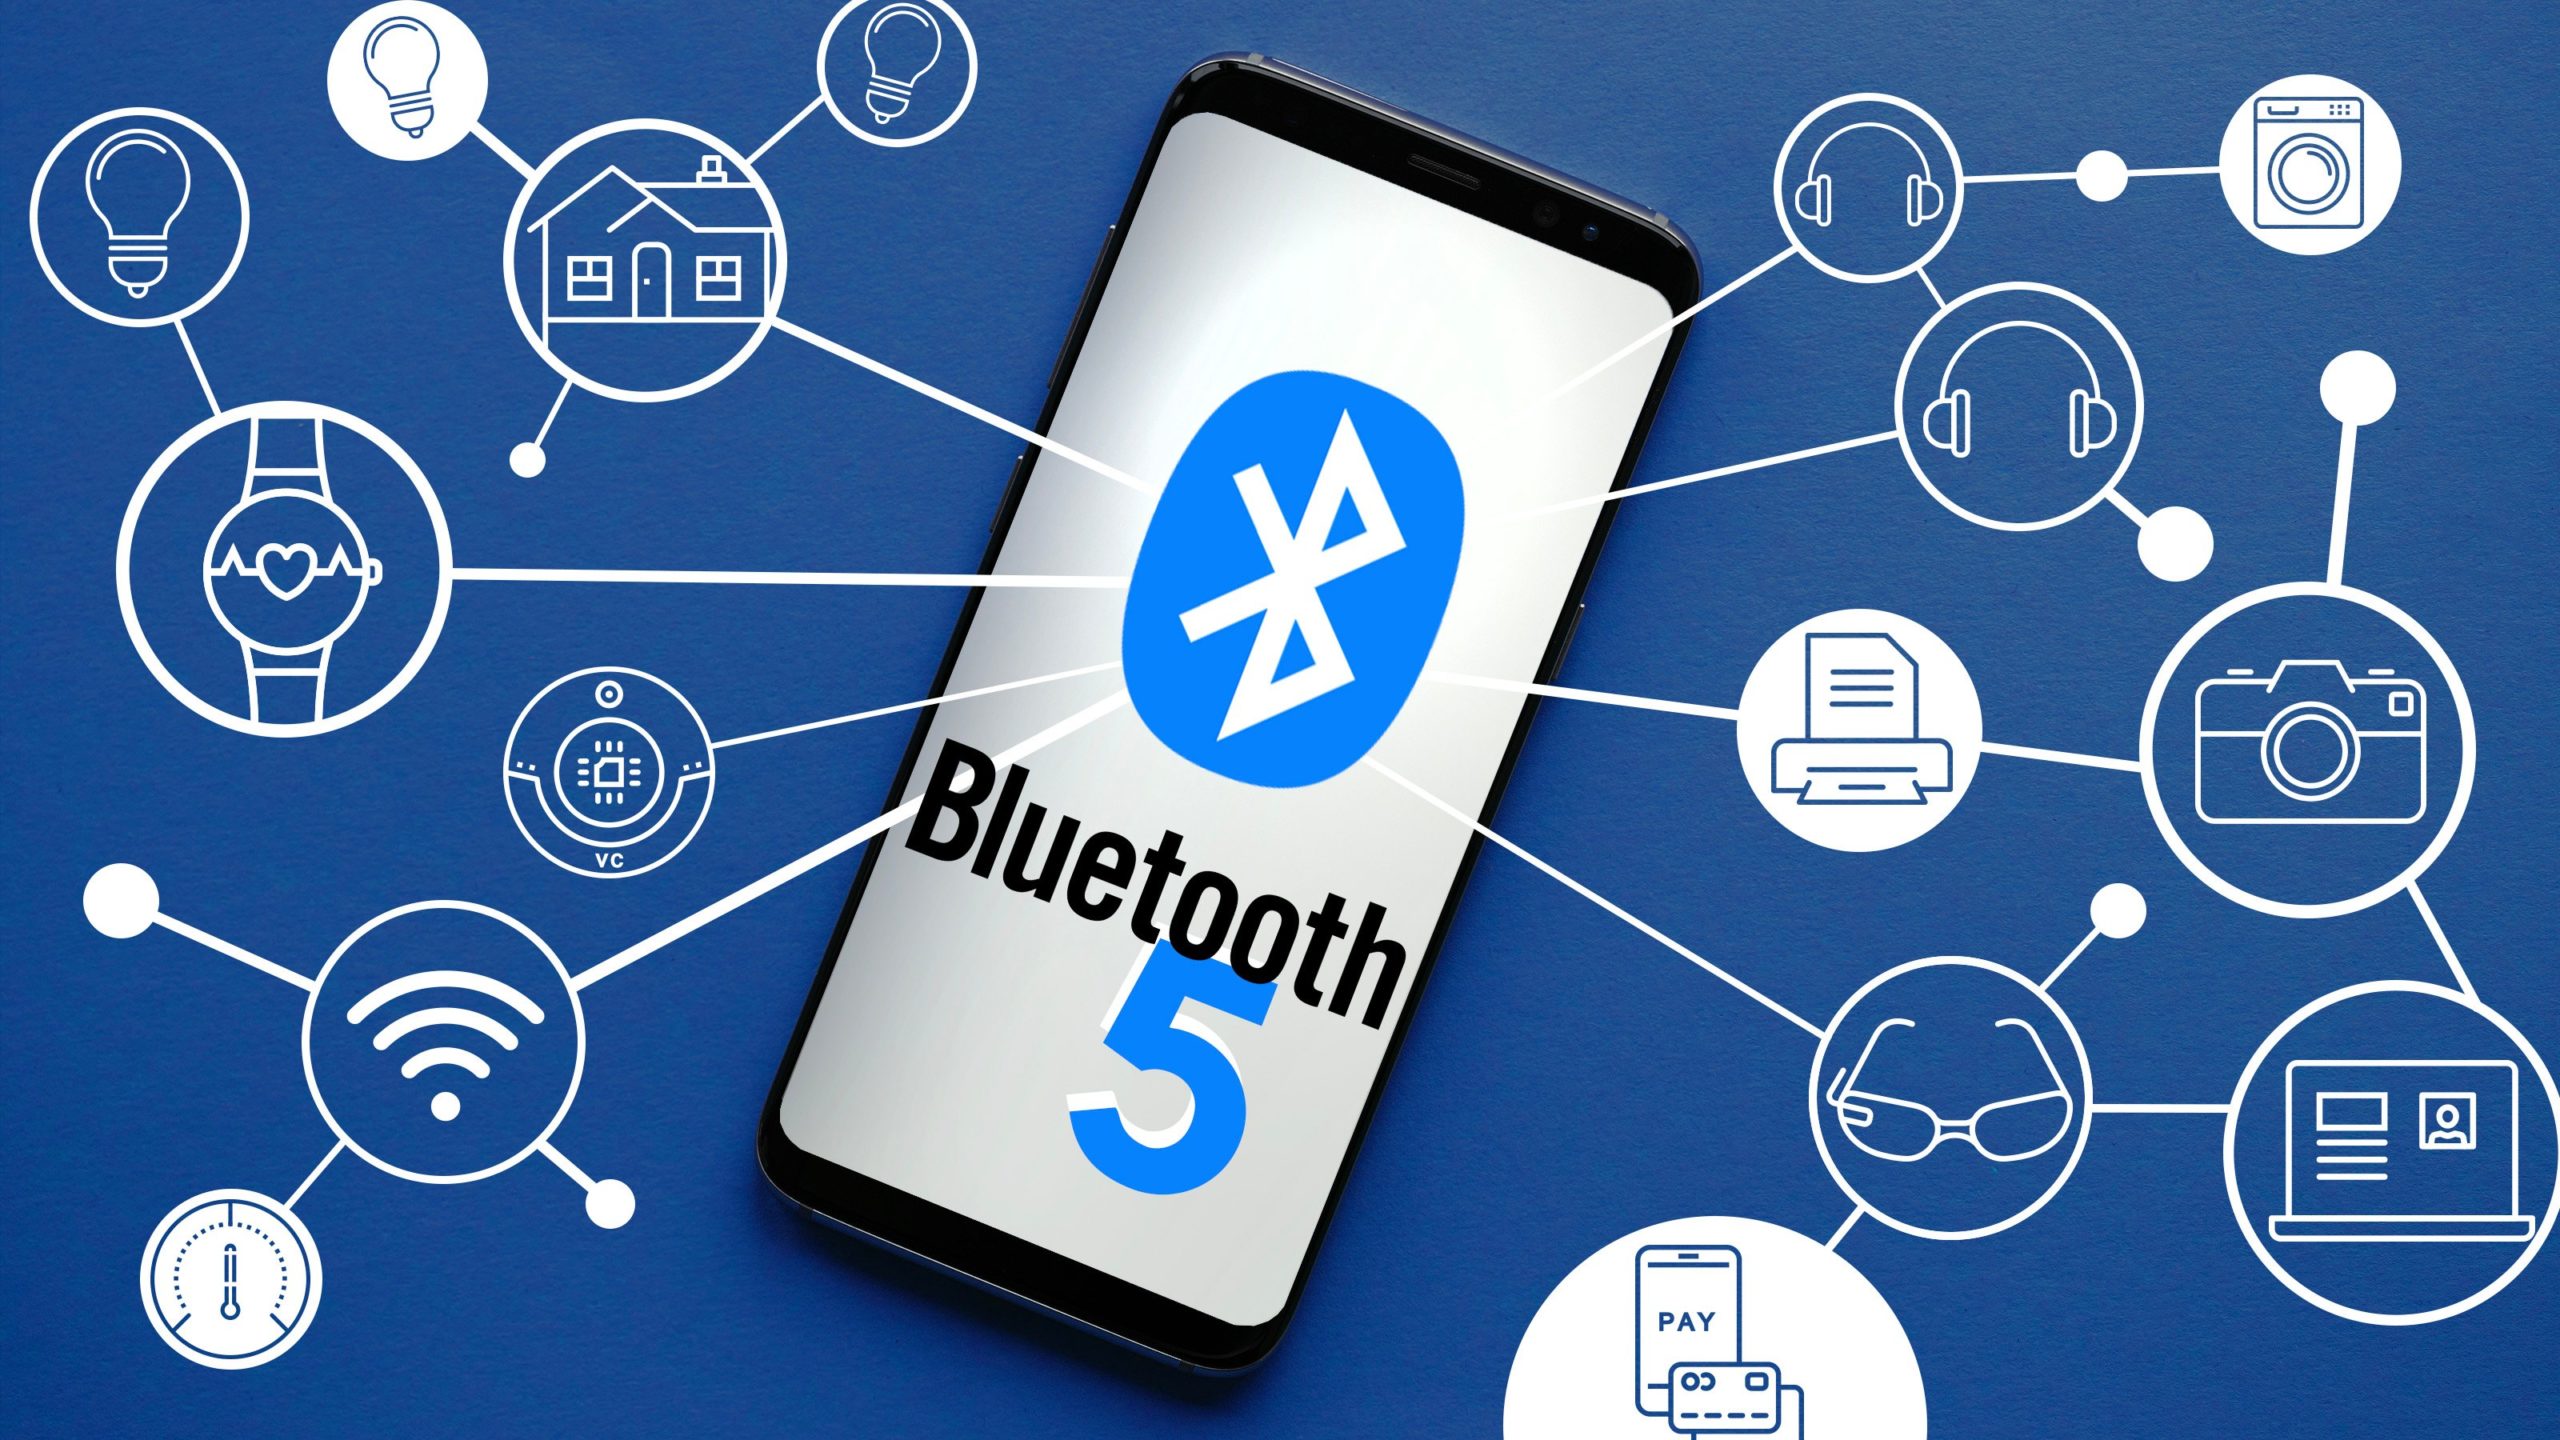 2. Bluetooth 5